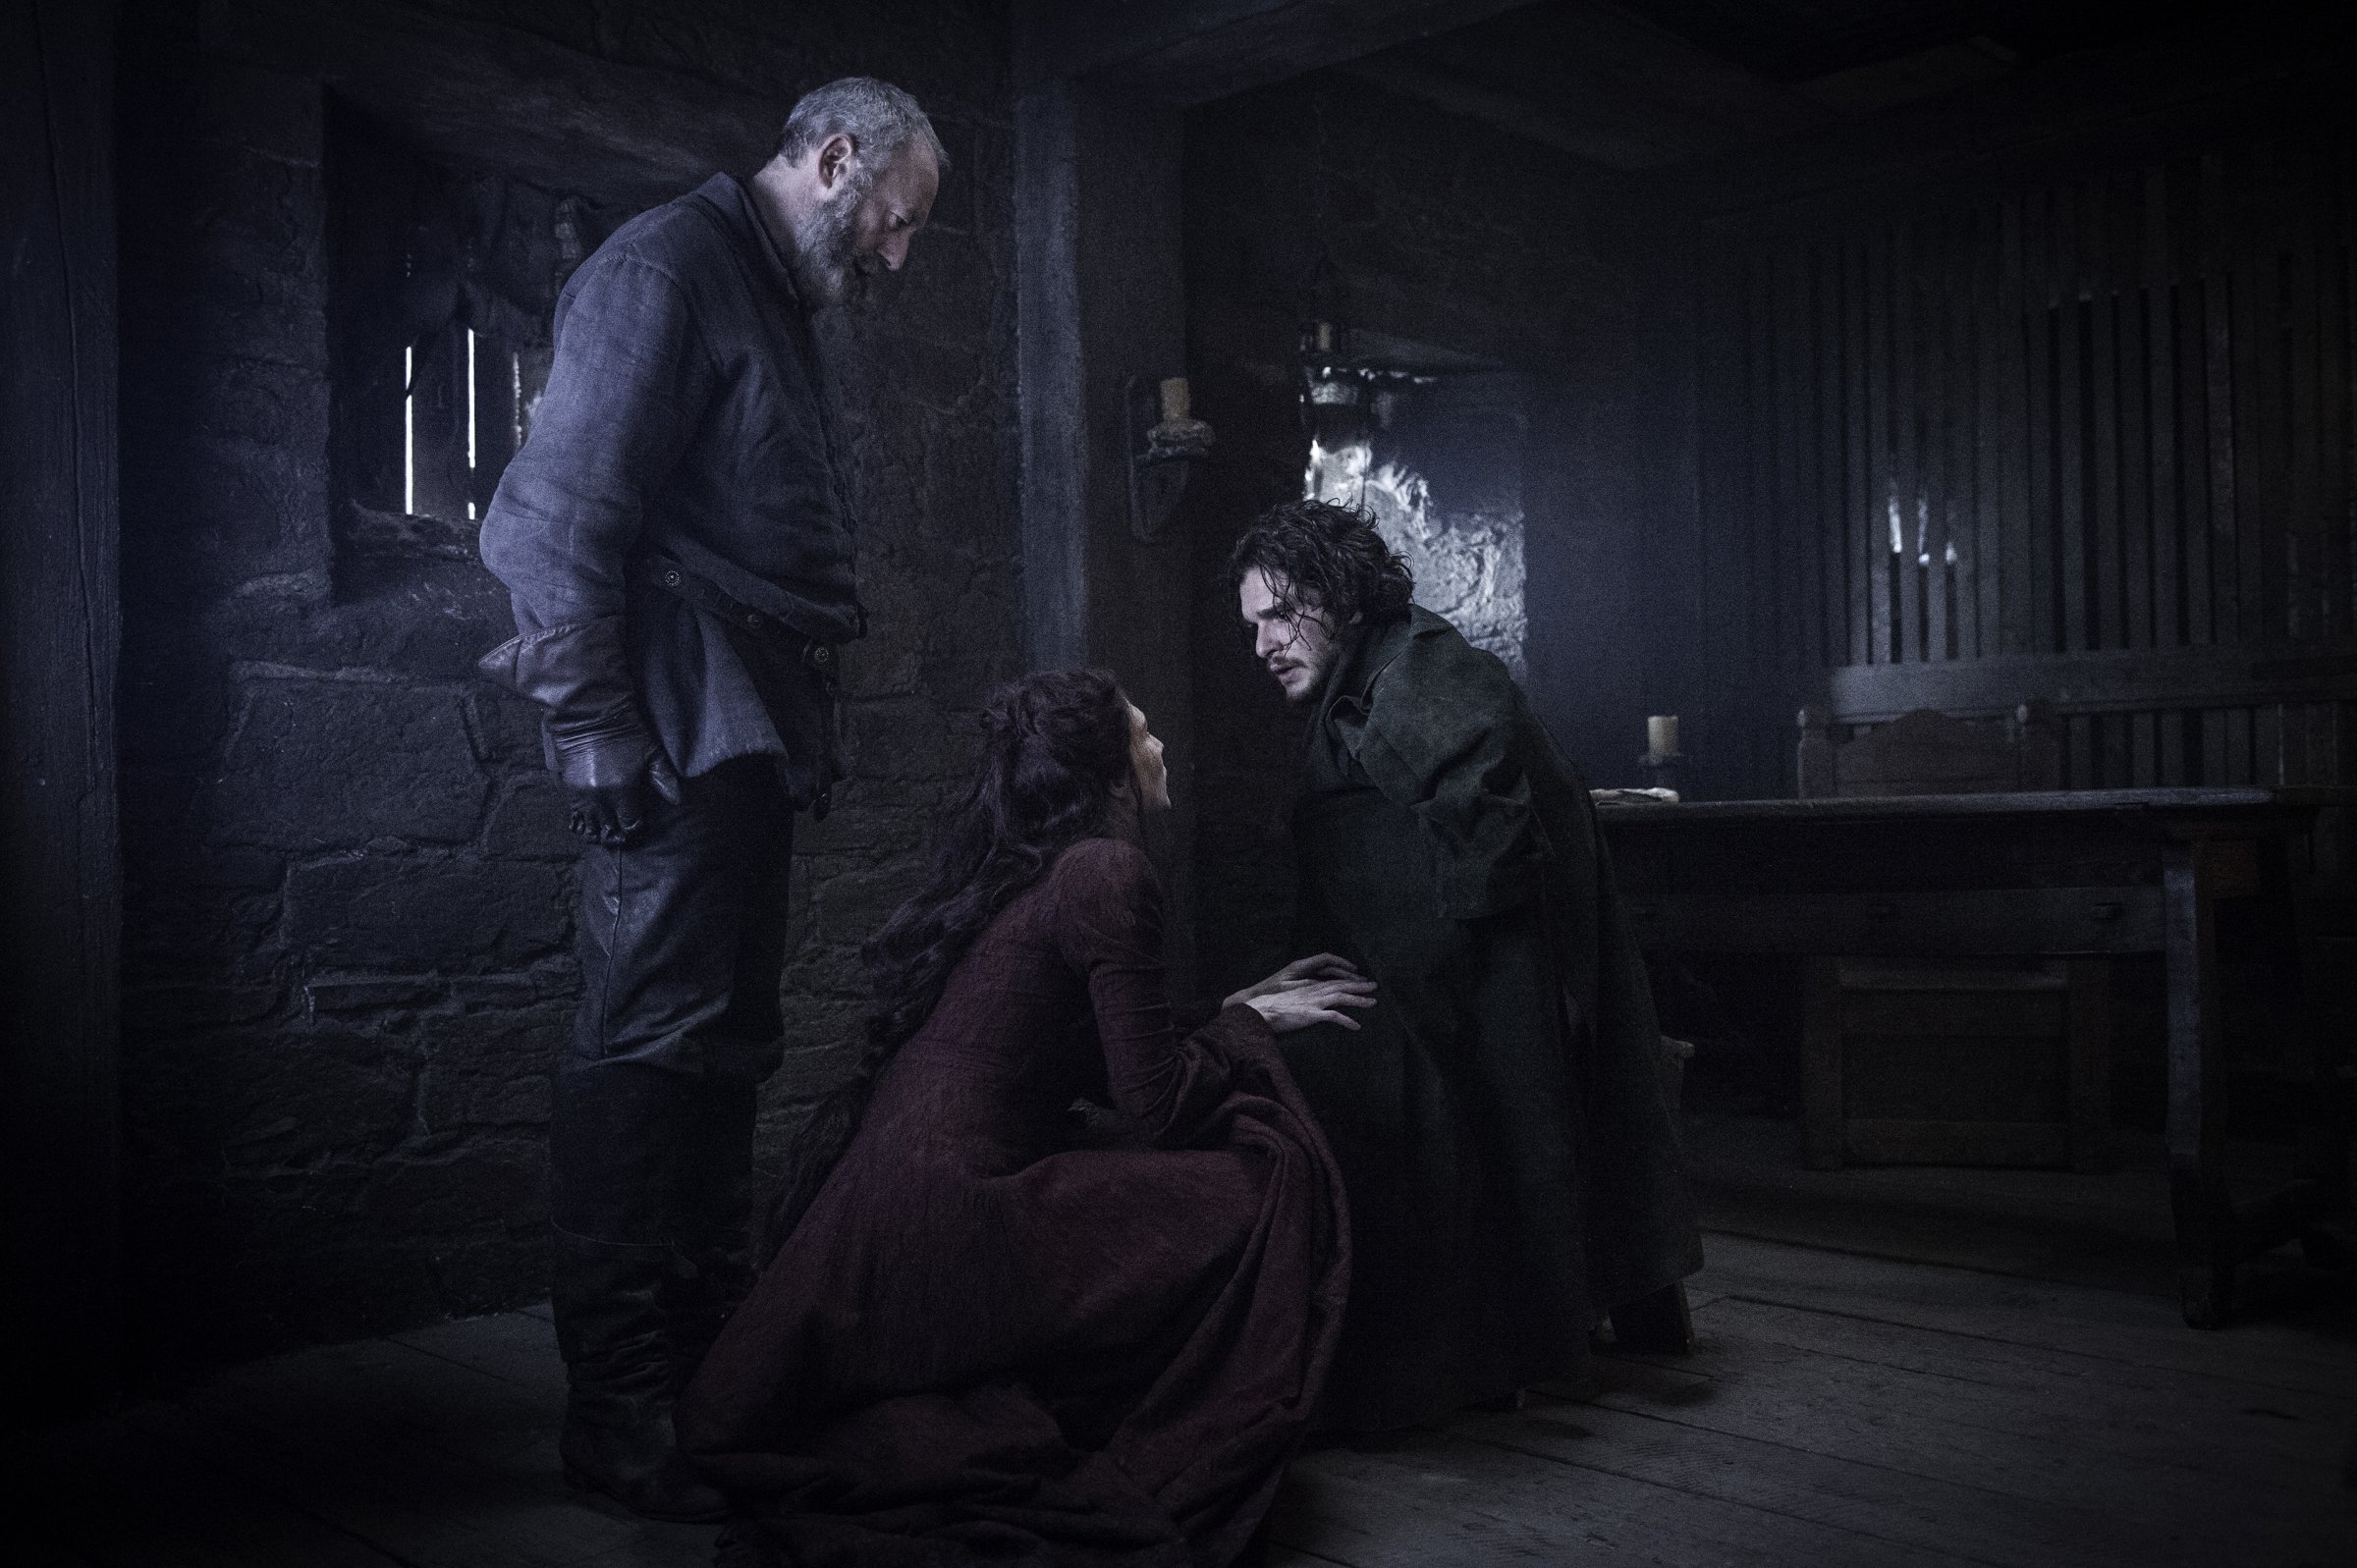 Liam Cunningham as Ser Davos, Carice van Houten as Melisandre and Kit Harington as Jon Snow